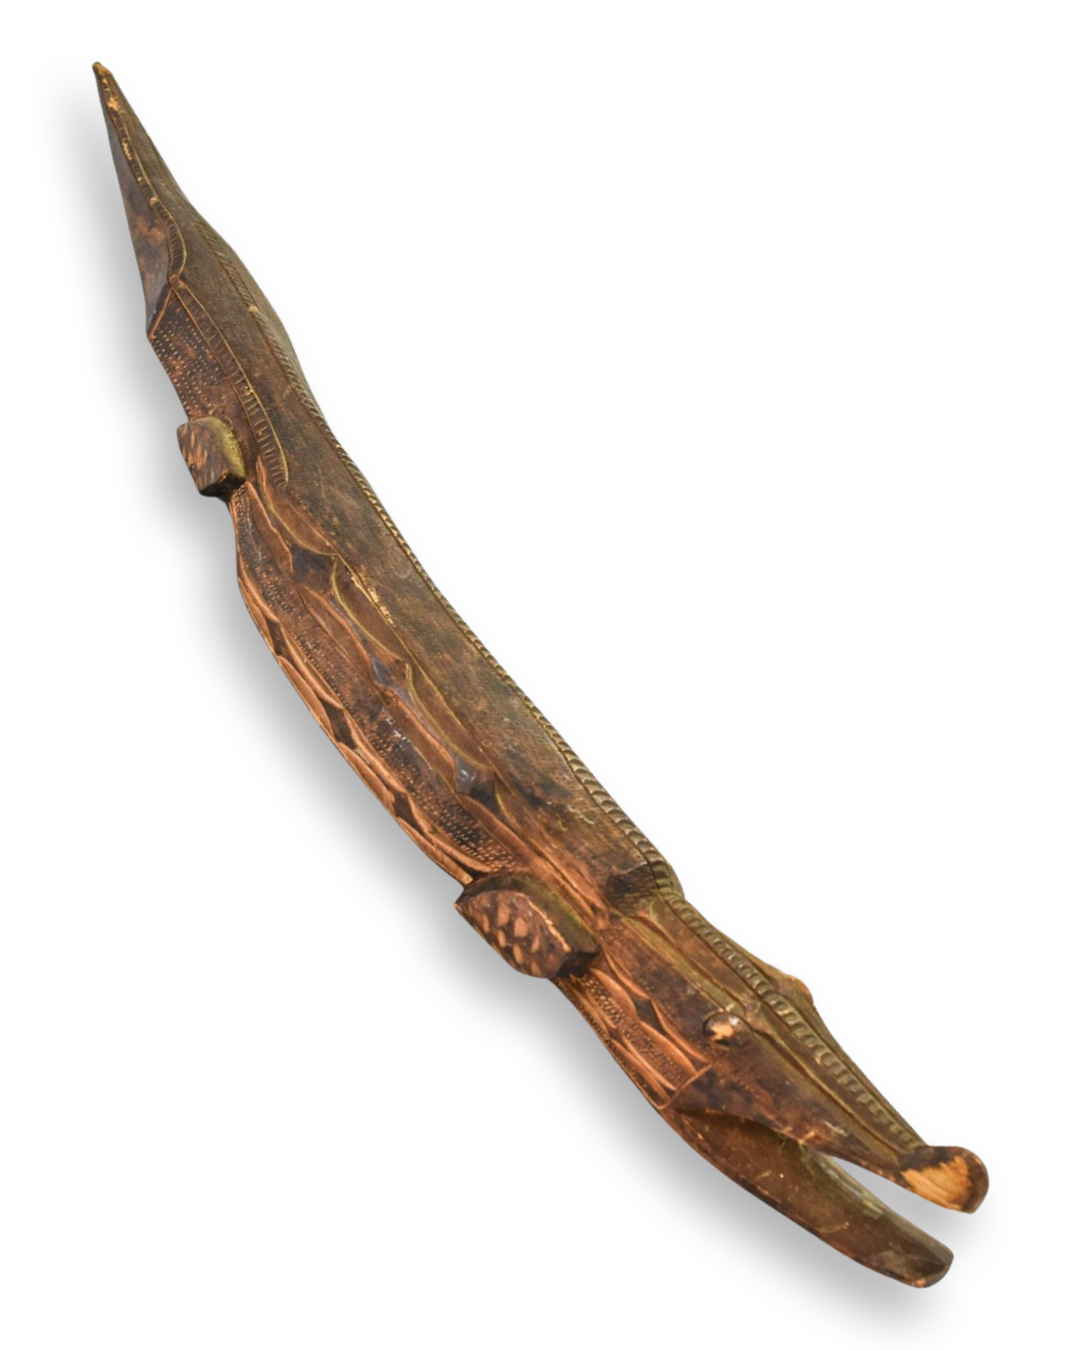 Marqueses Islands Carved Wood Crocodile